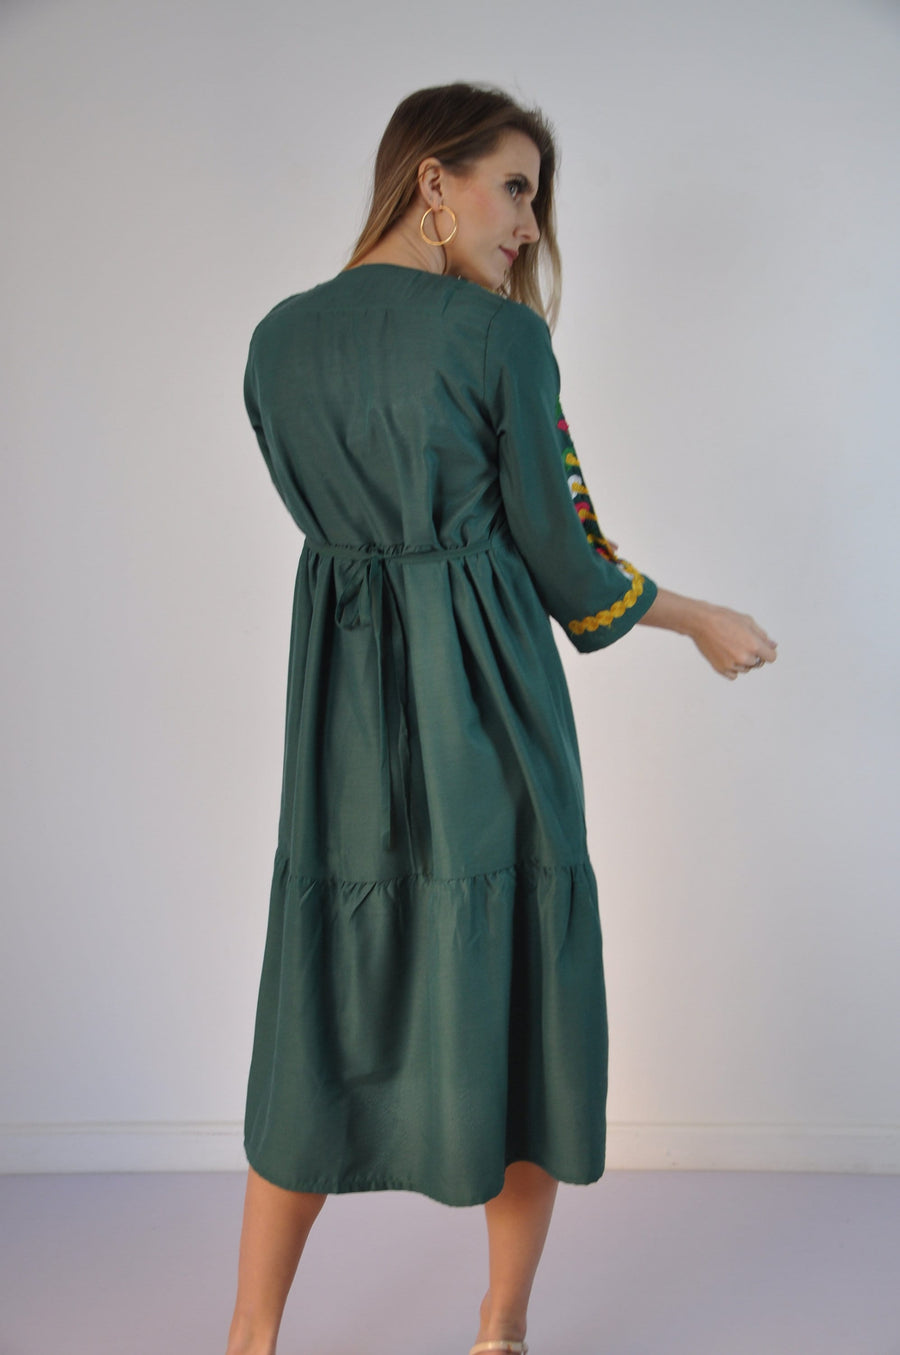 Short Tunic, Long sleeve embroidered kaftan dress, Boho embroidery tunic dress, Egyptian cotton. Autumn, beach, resorts, Gypsy dress.